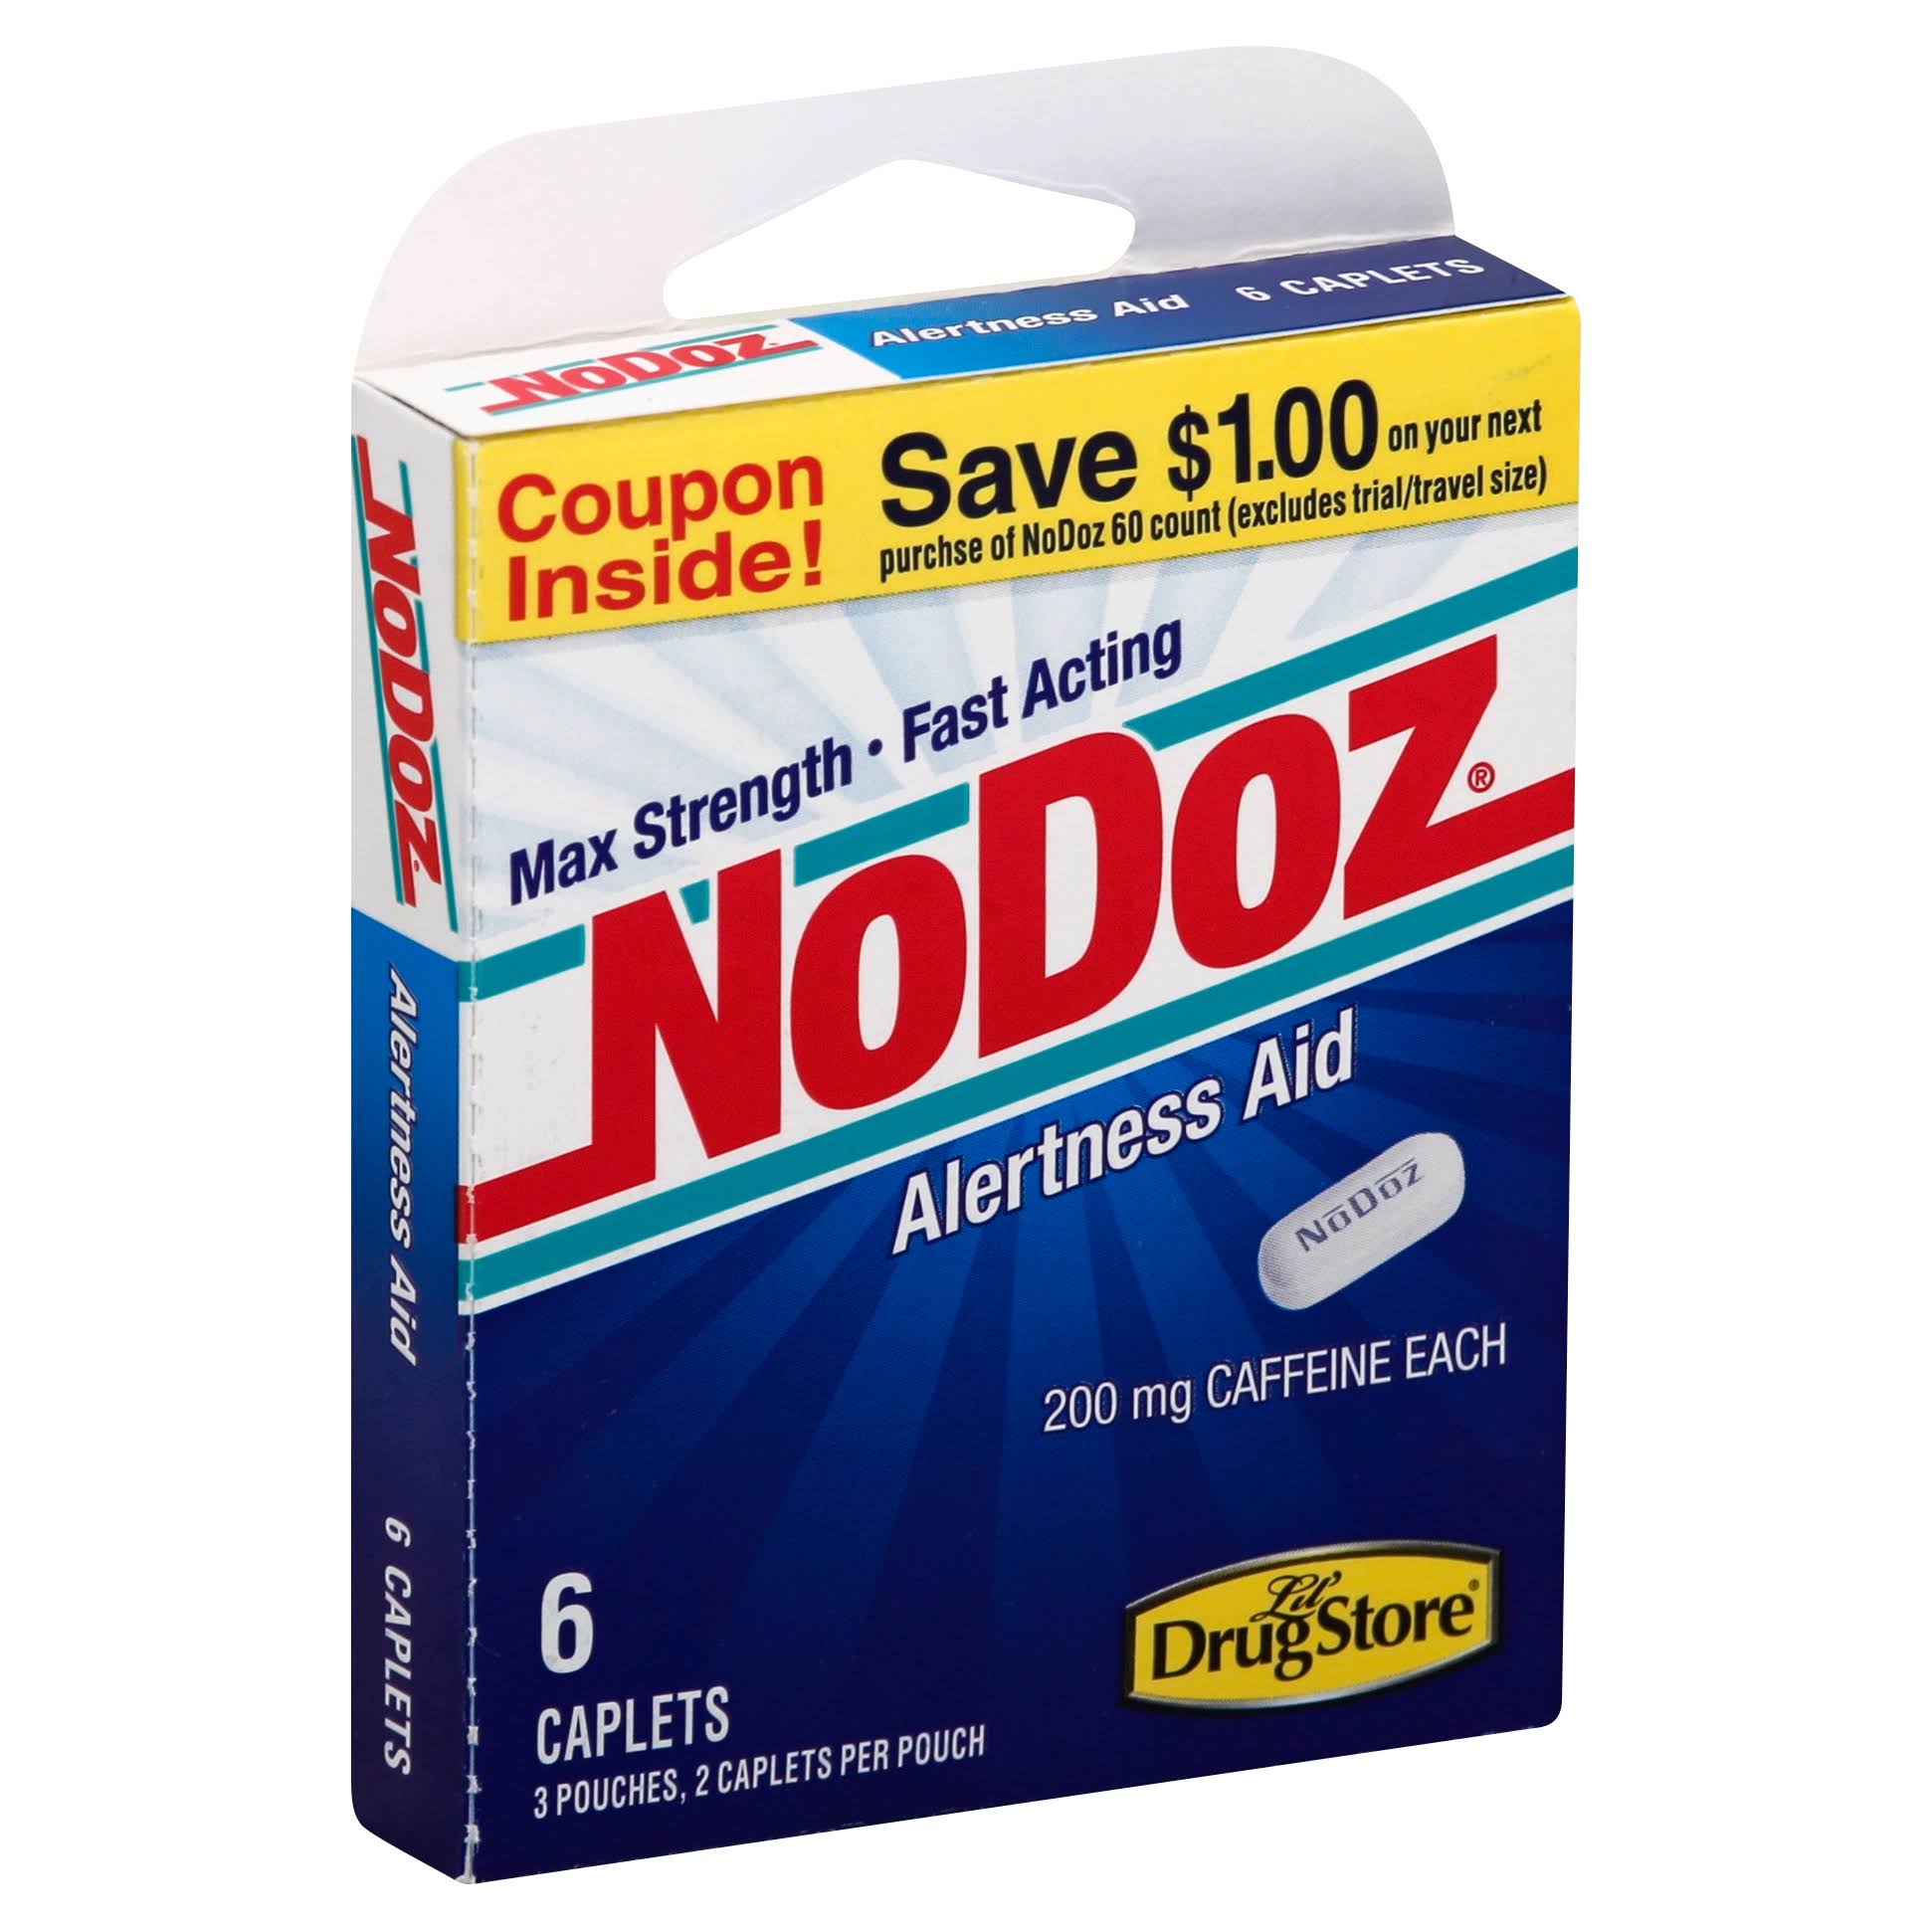 Lil Drug Store NoDoz Alertness Aid, Max Strength, 200 mg, Caplets - 6 caplets